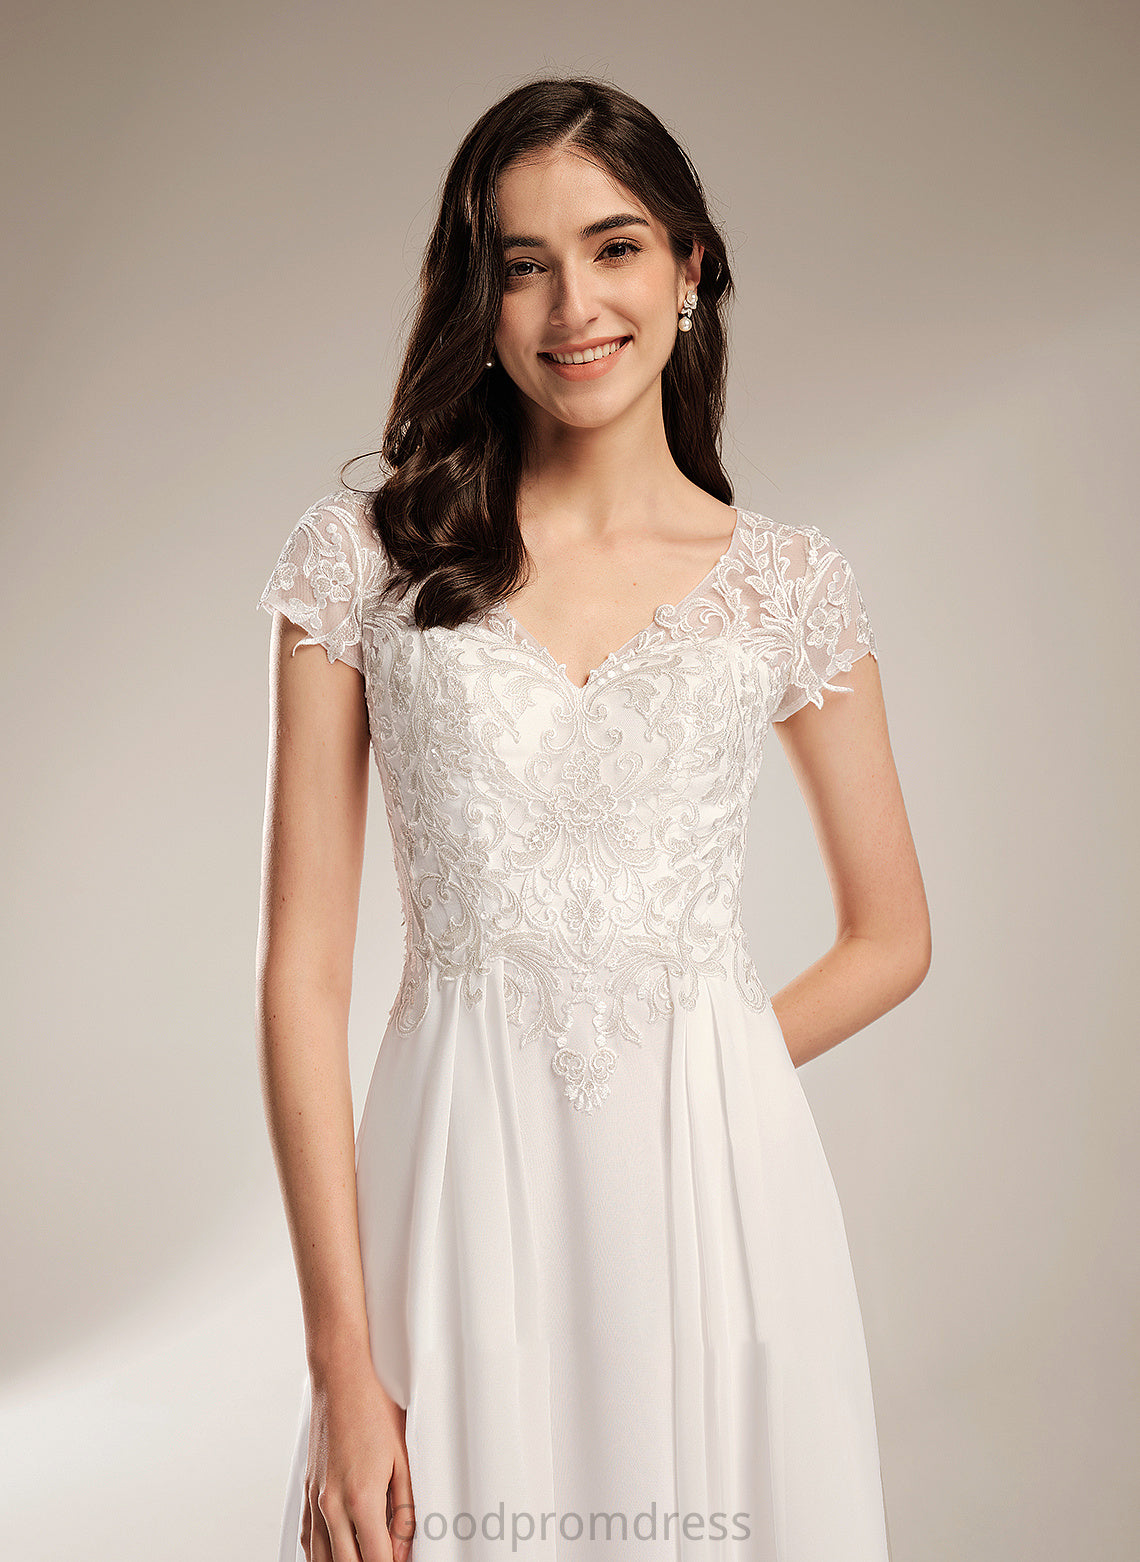 Dress Asymmetrical A-Line Wedding Dresses Summer Wedding Lace V-neck With